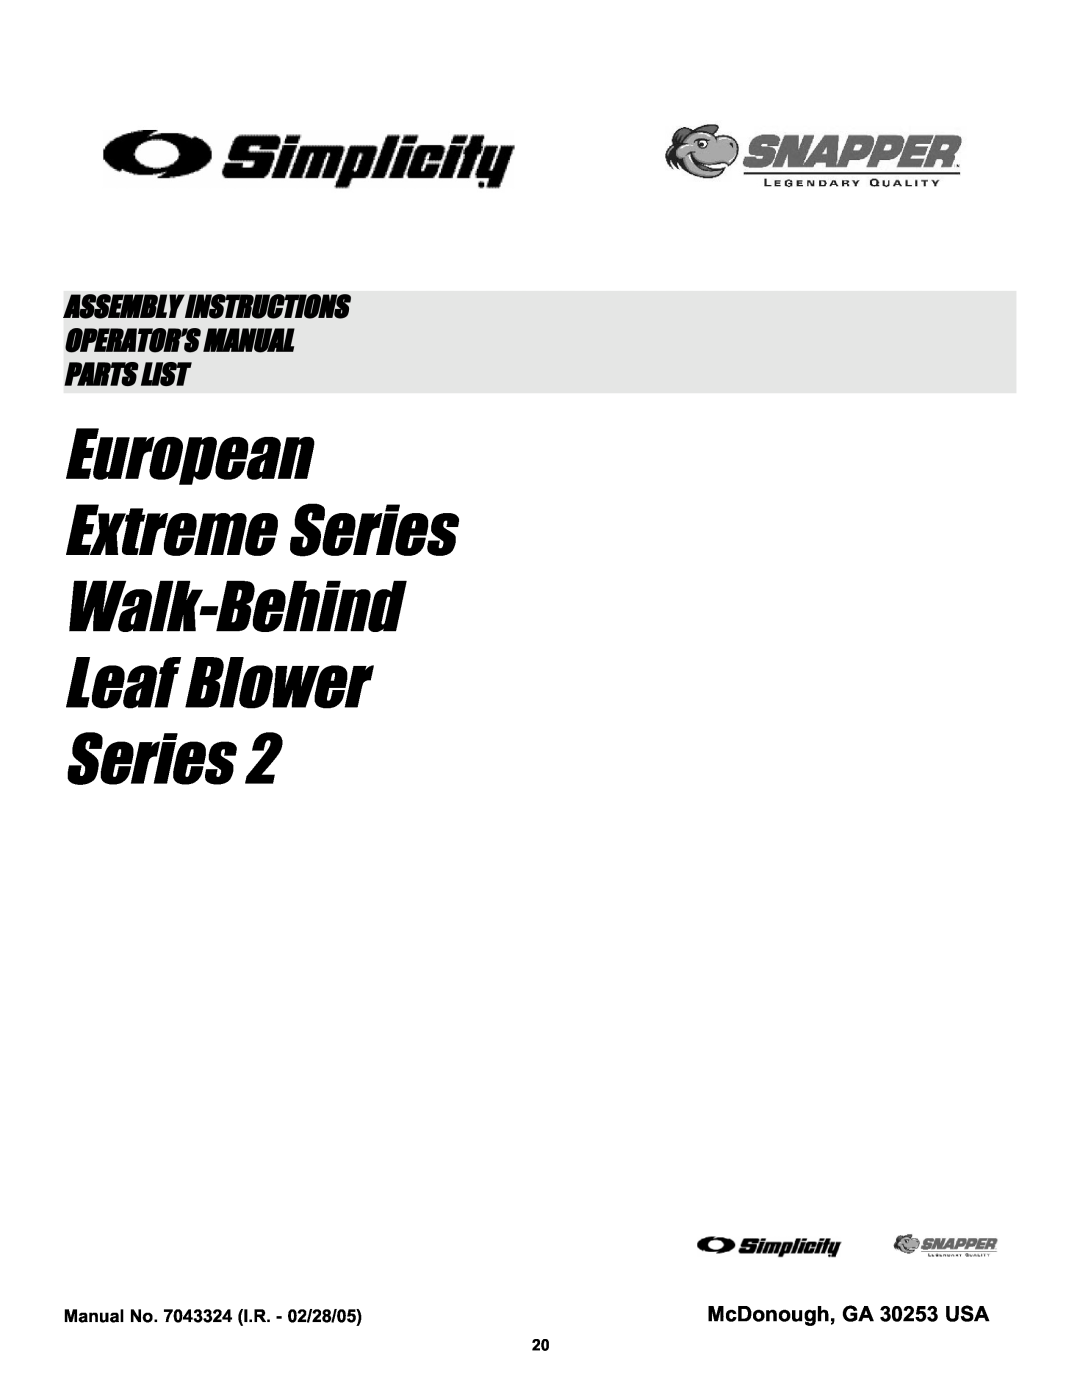 Snapper ELBX10152BV manual McDonough, GA 30253 USA, European Extreme Series Walk-Behind Leaf Blower Series 